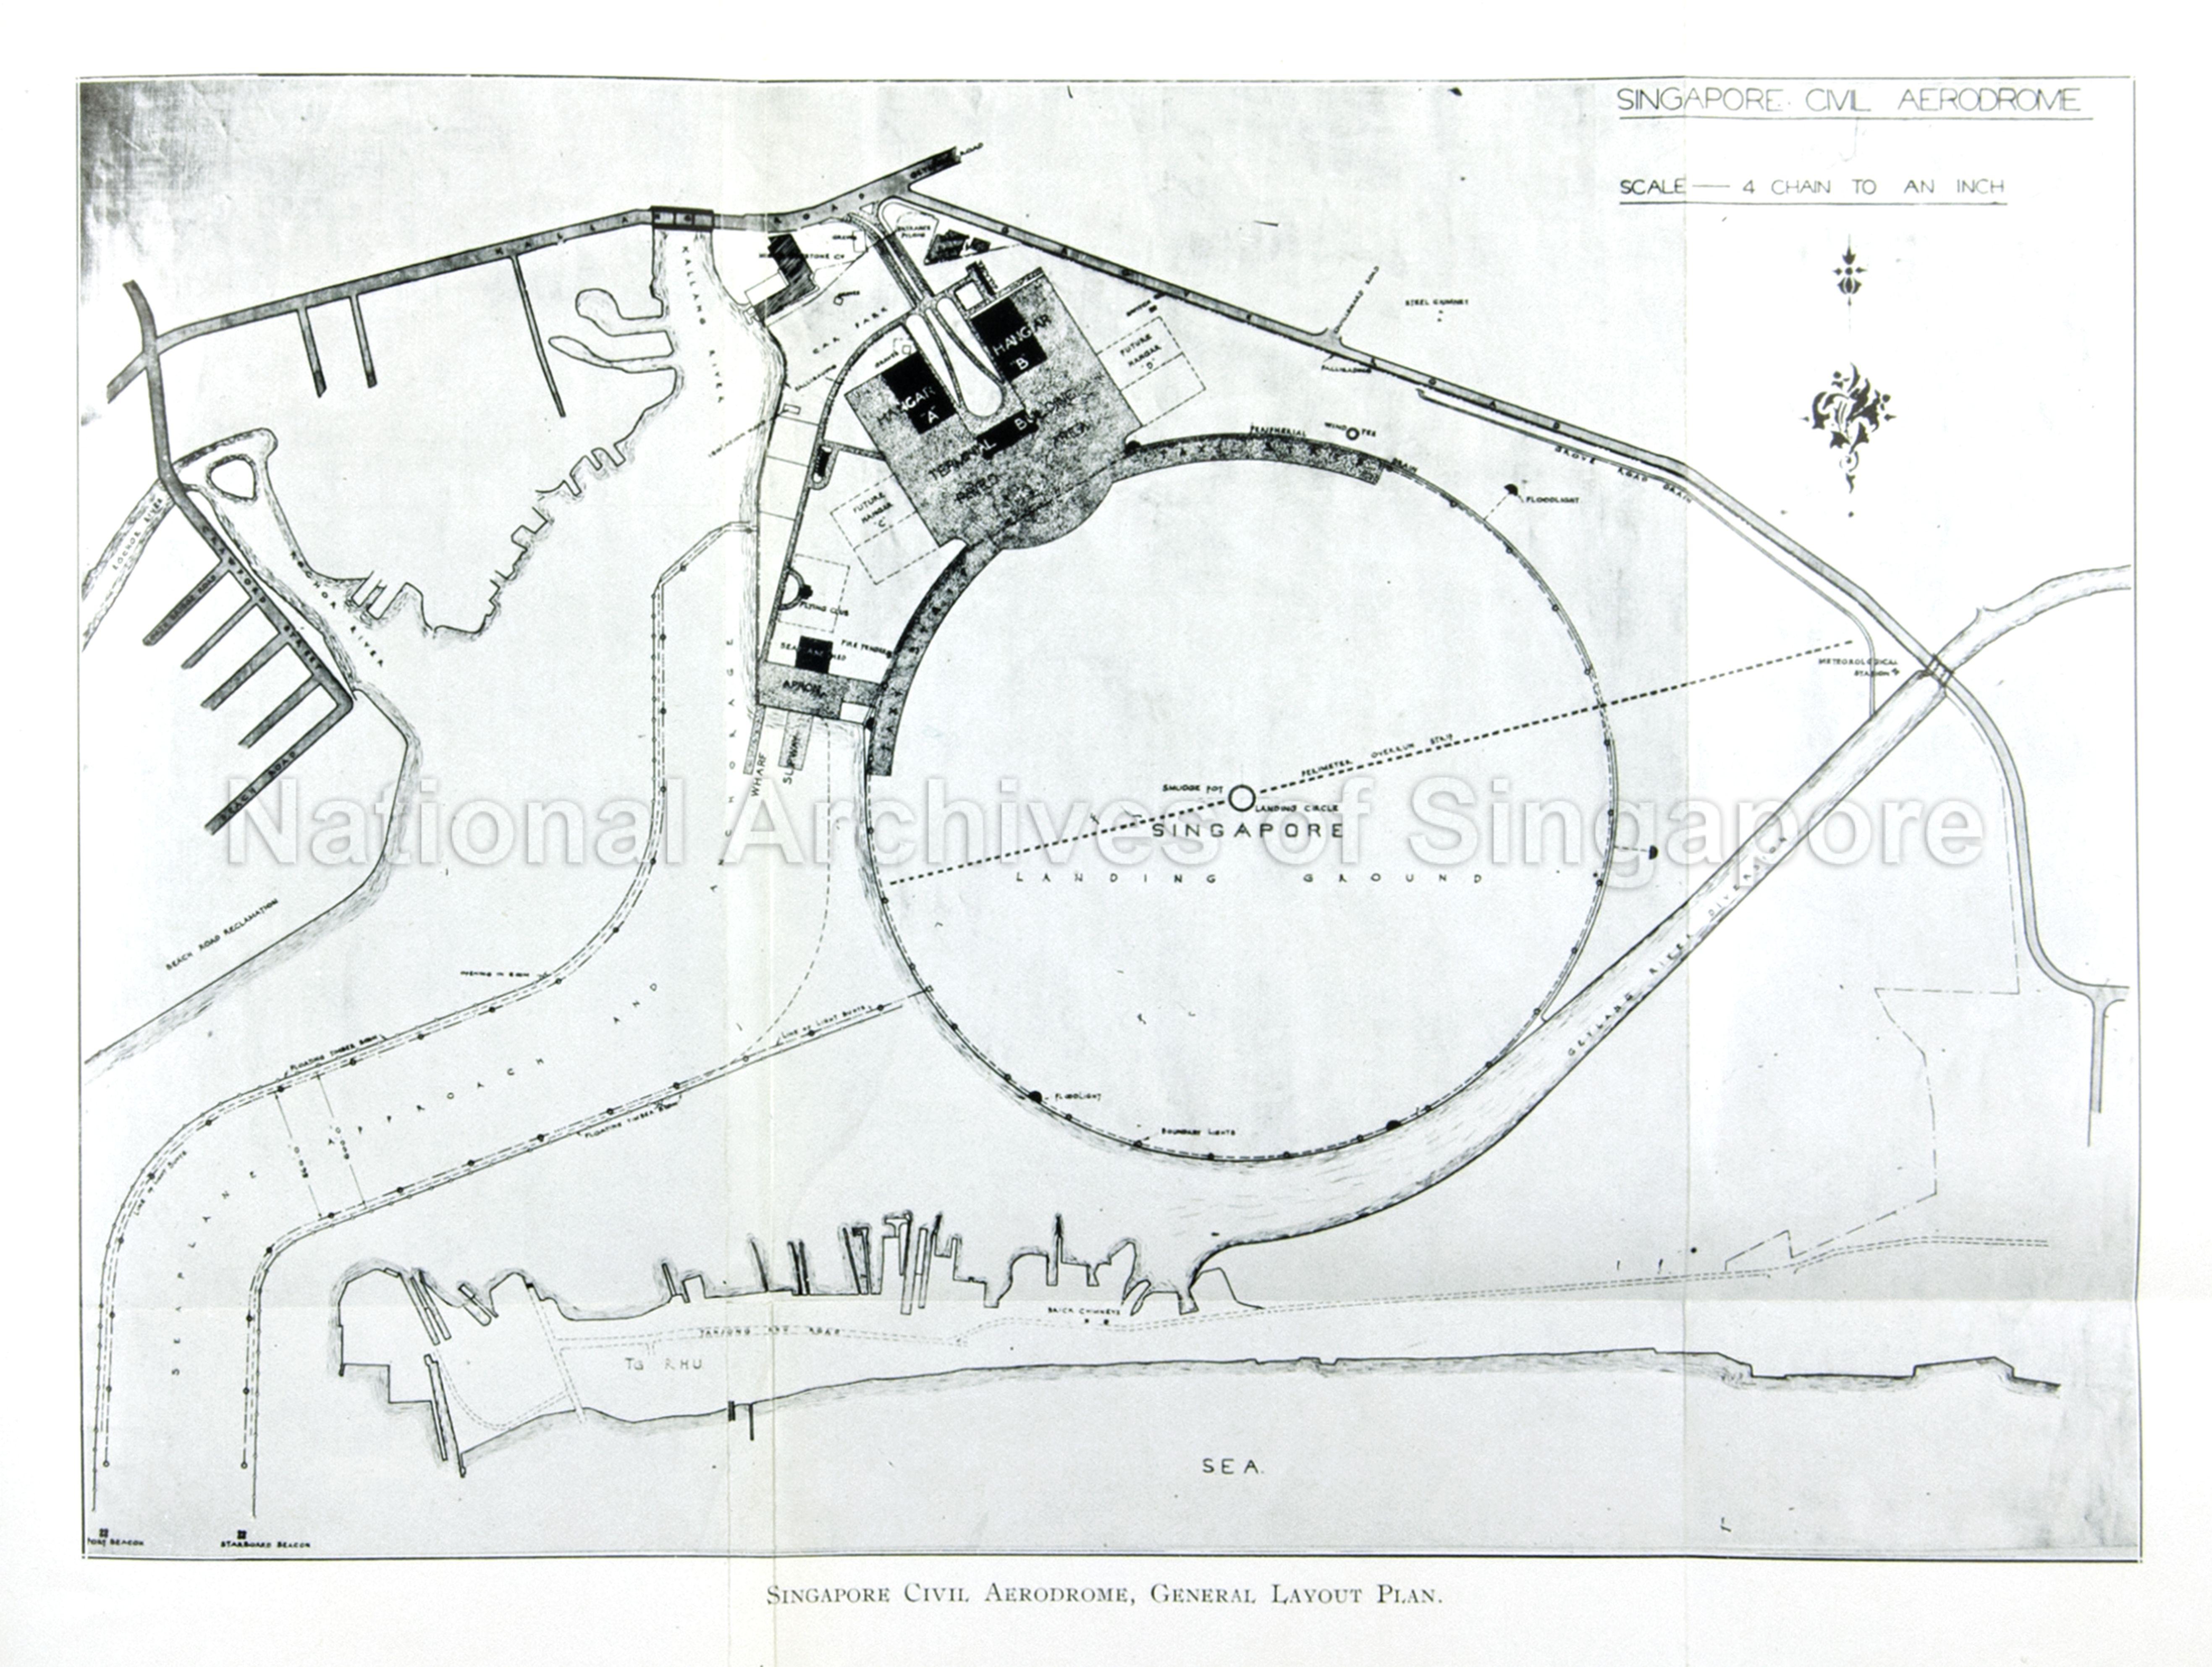 Singapore Civil Aerodrome: a general layout plan